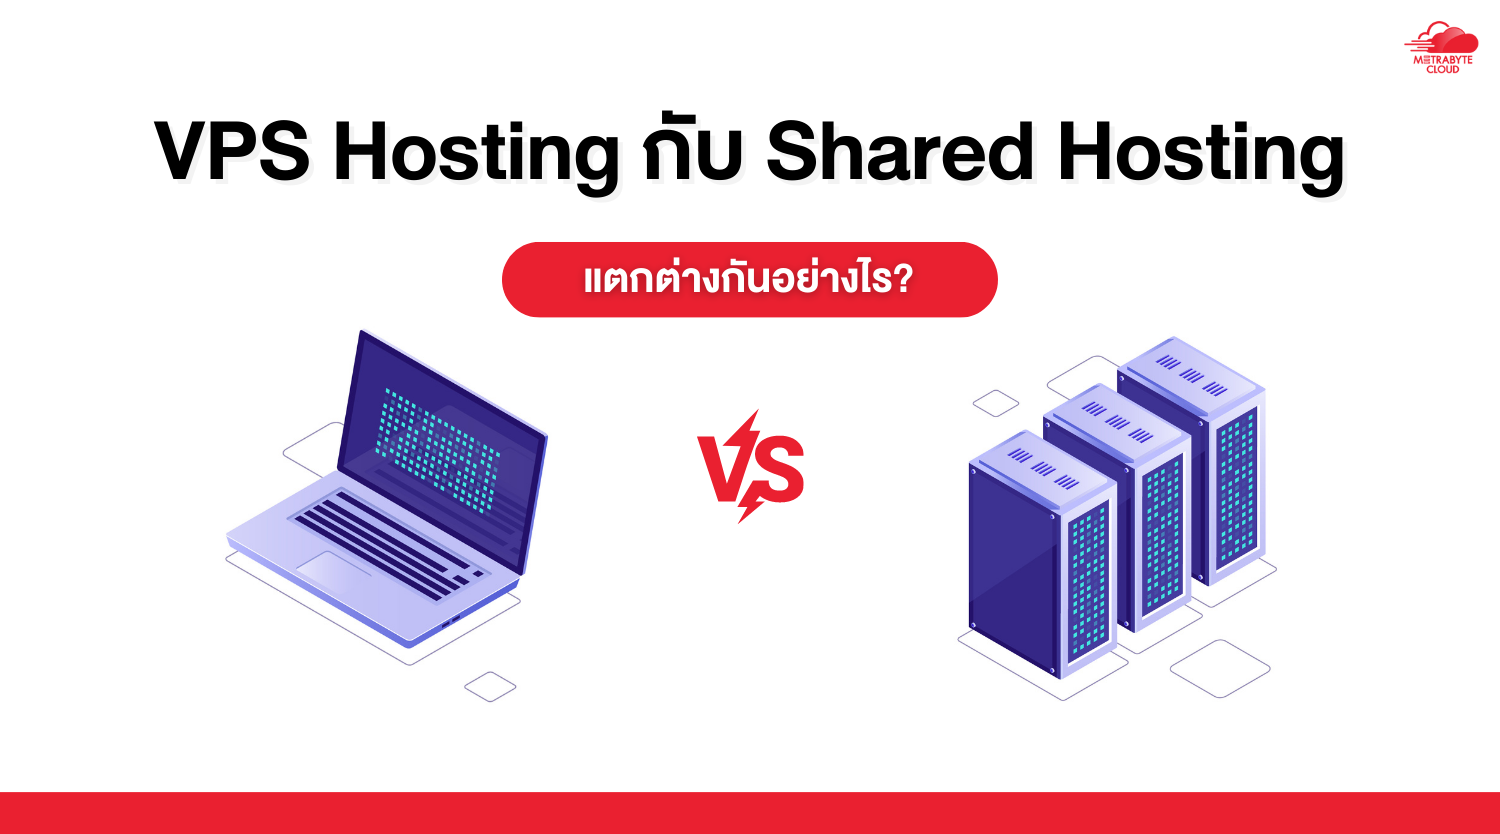 VPS Hosting กับ Shared Hosting แตกต่างกันอย่างไร